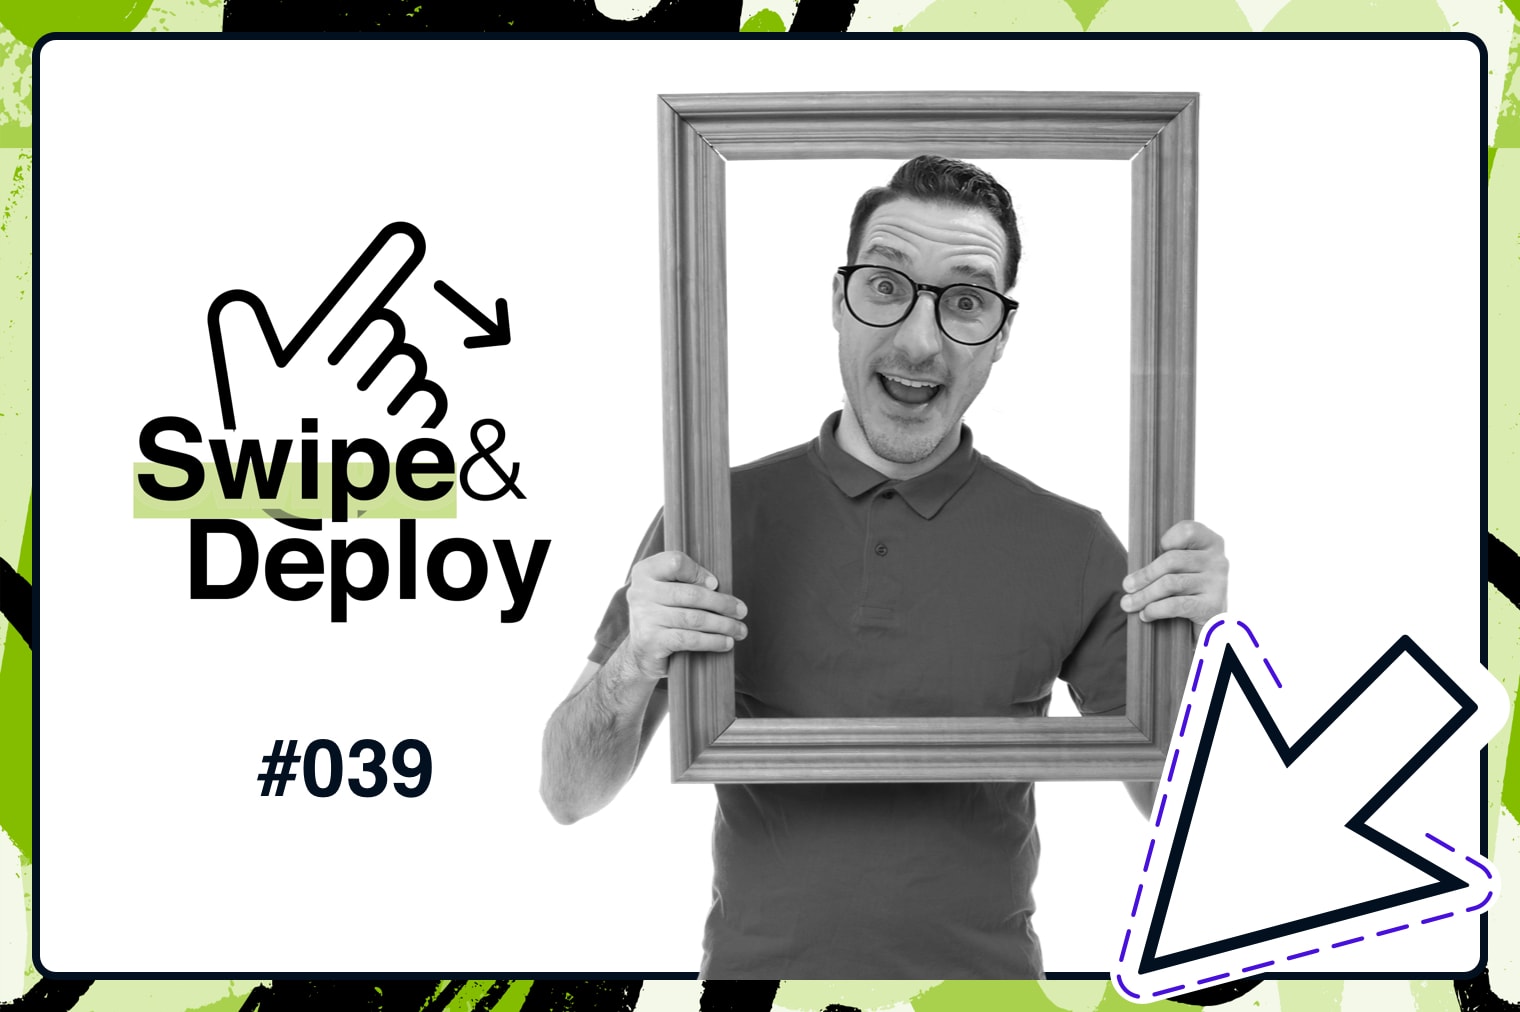 Swipe & Deploy 39 blog hero image of man posing behind a picture frame.